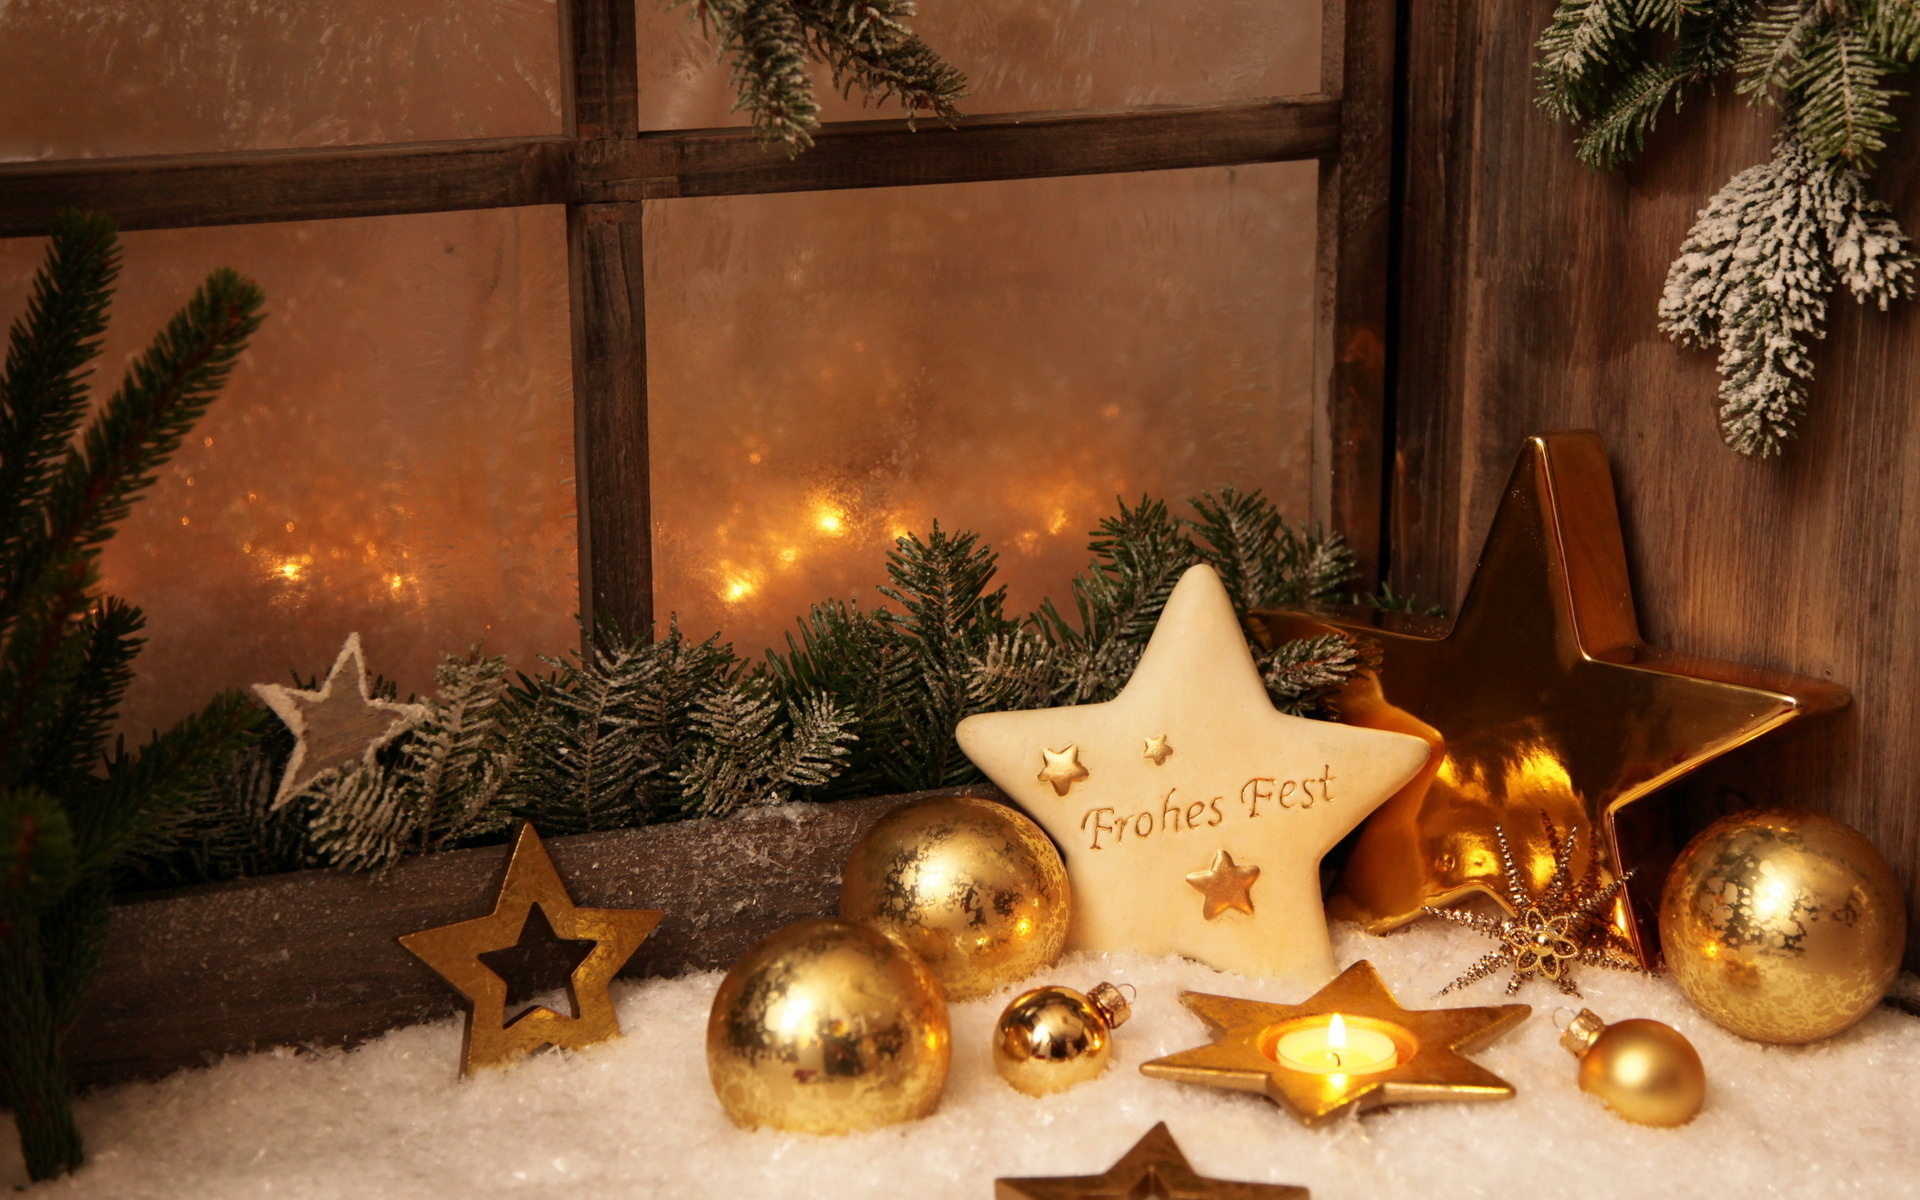 Christmas Decorations WideScreen - Wallpaper, High Definition, High Quality, Widescreen